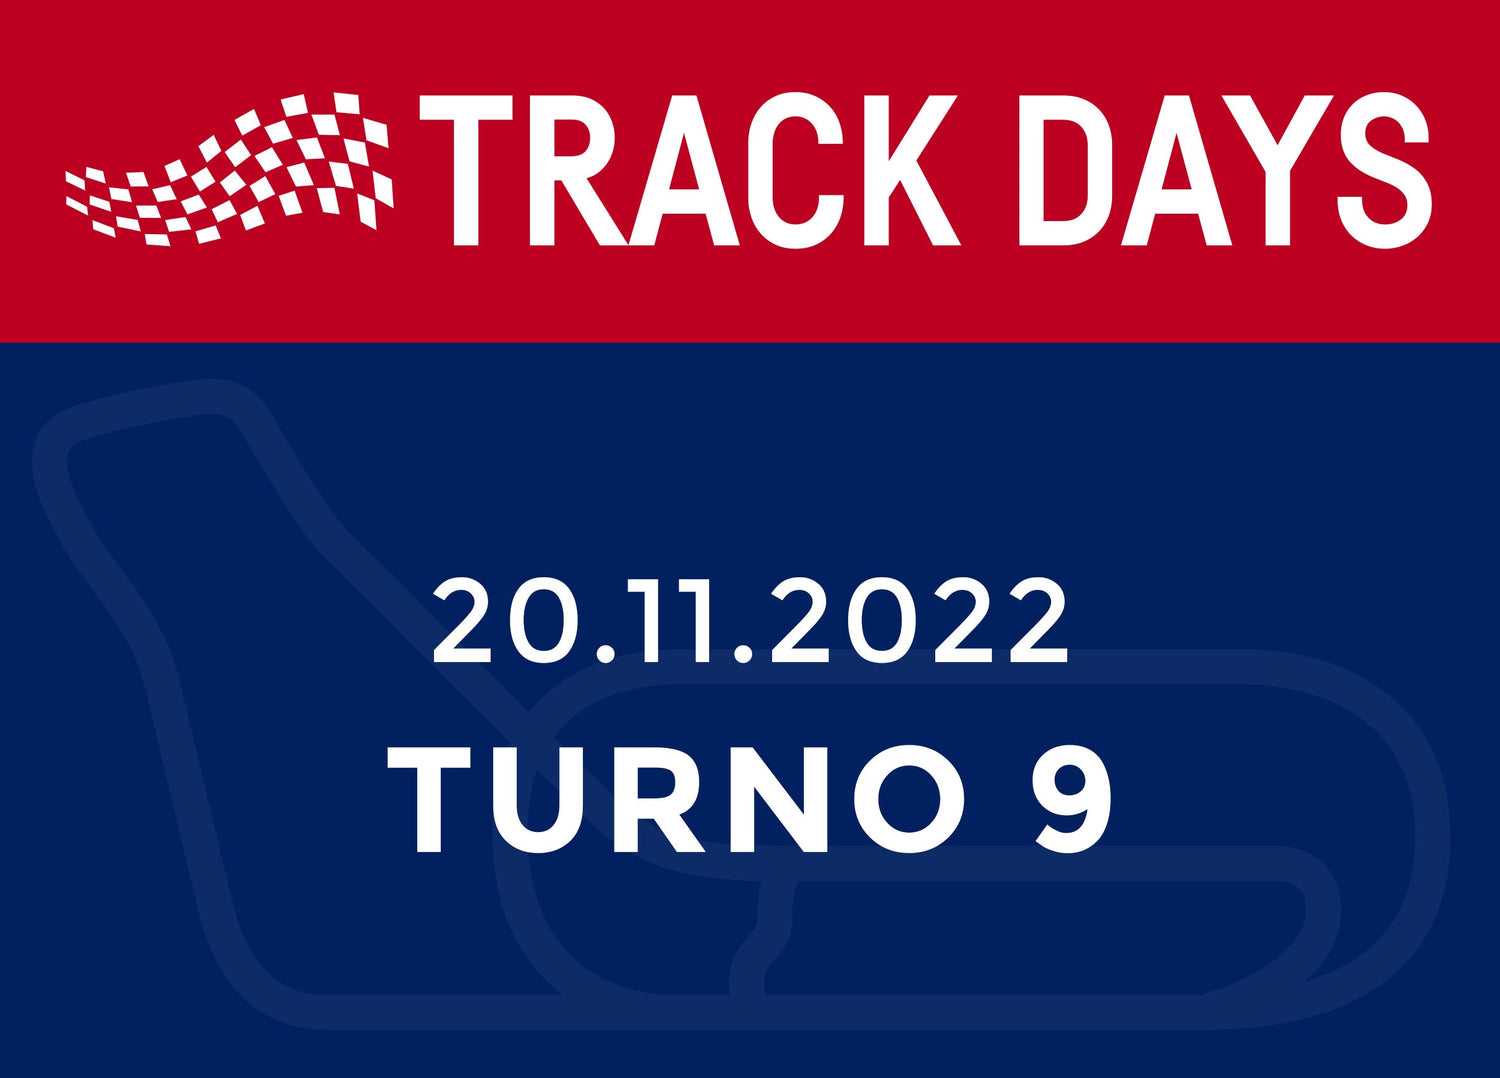 TRACK DAYS 20.11.22 TURNO 9